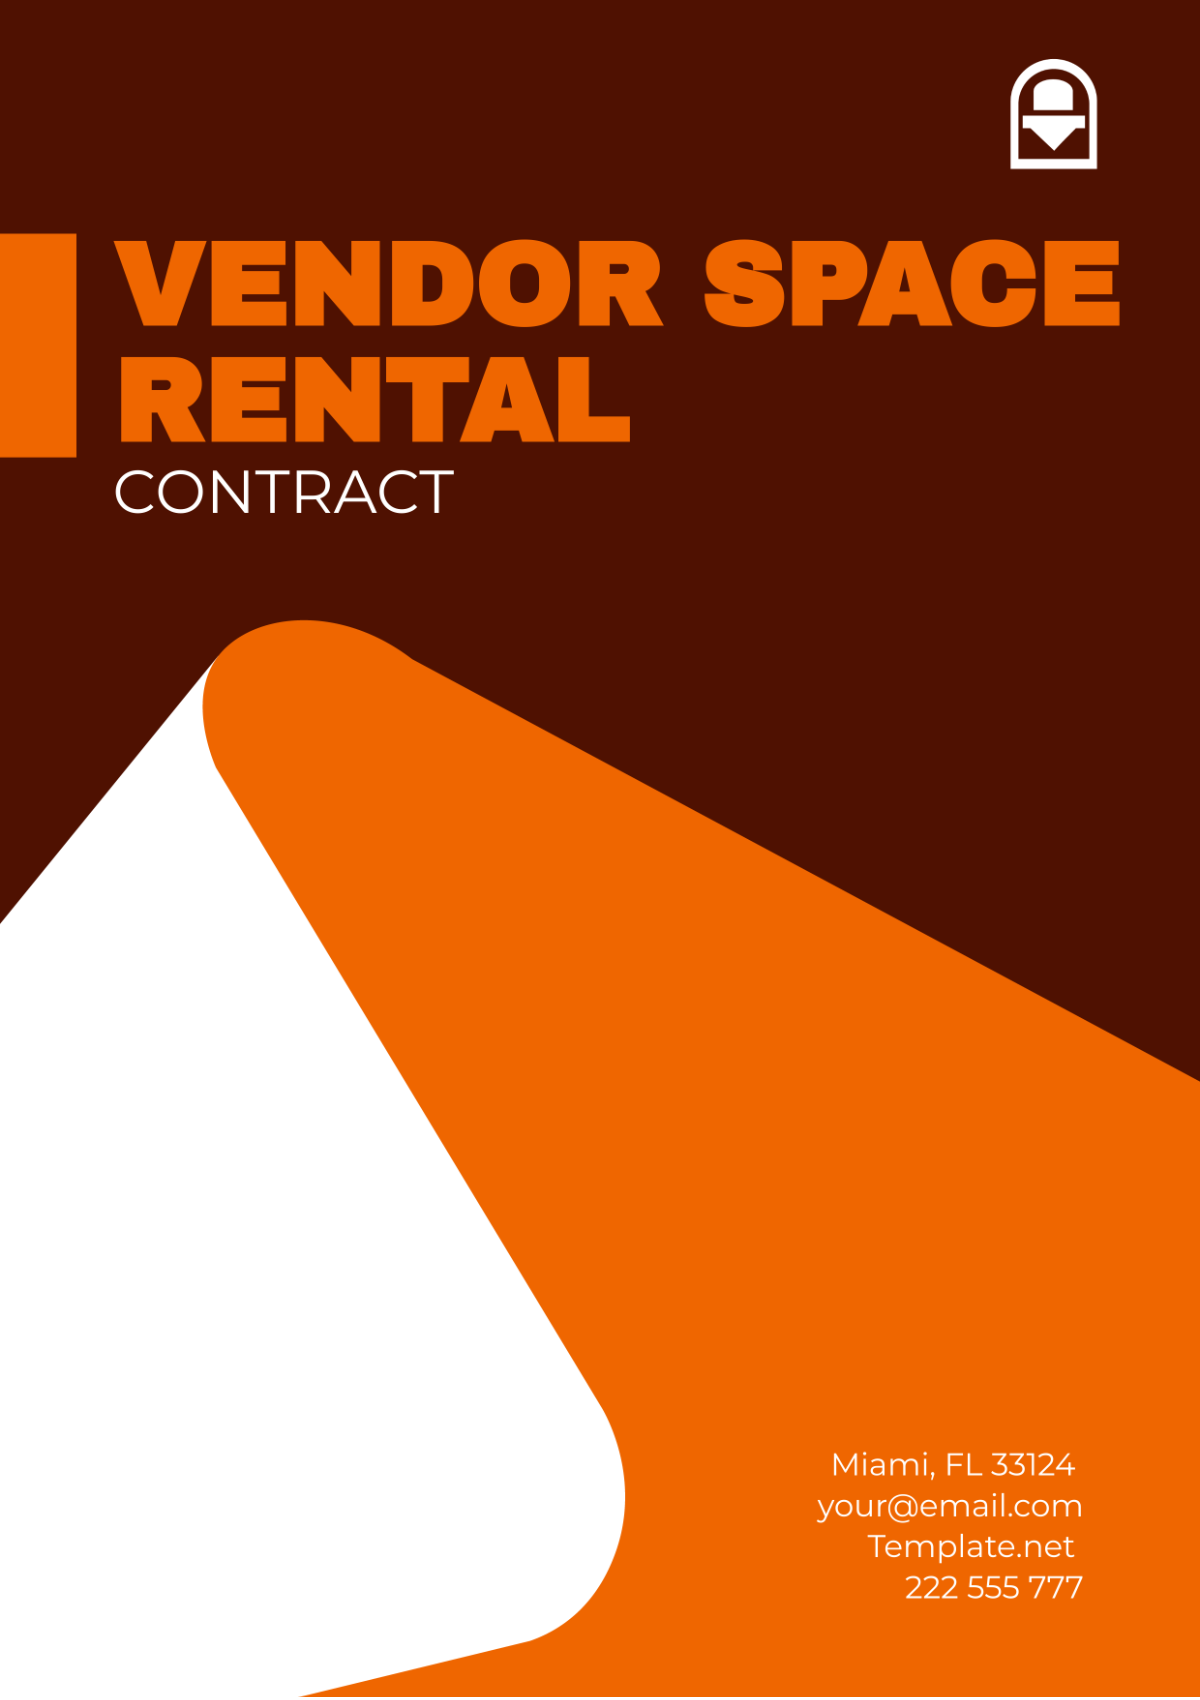 Vendor Space Rental Contract Template